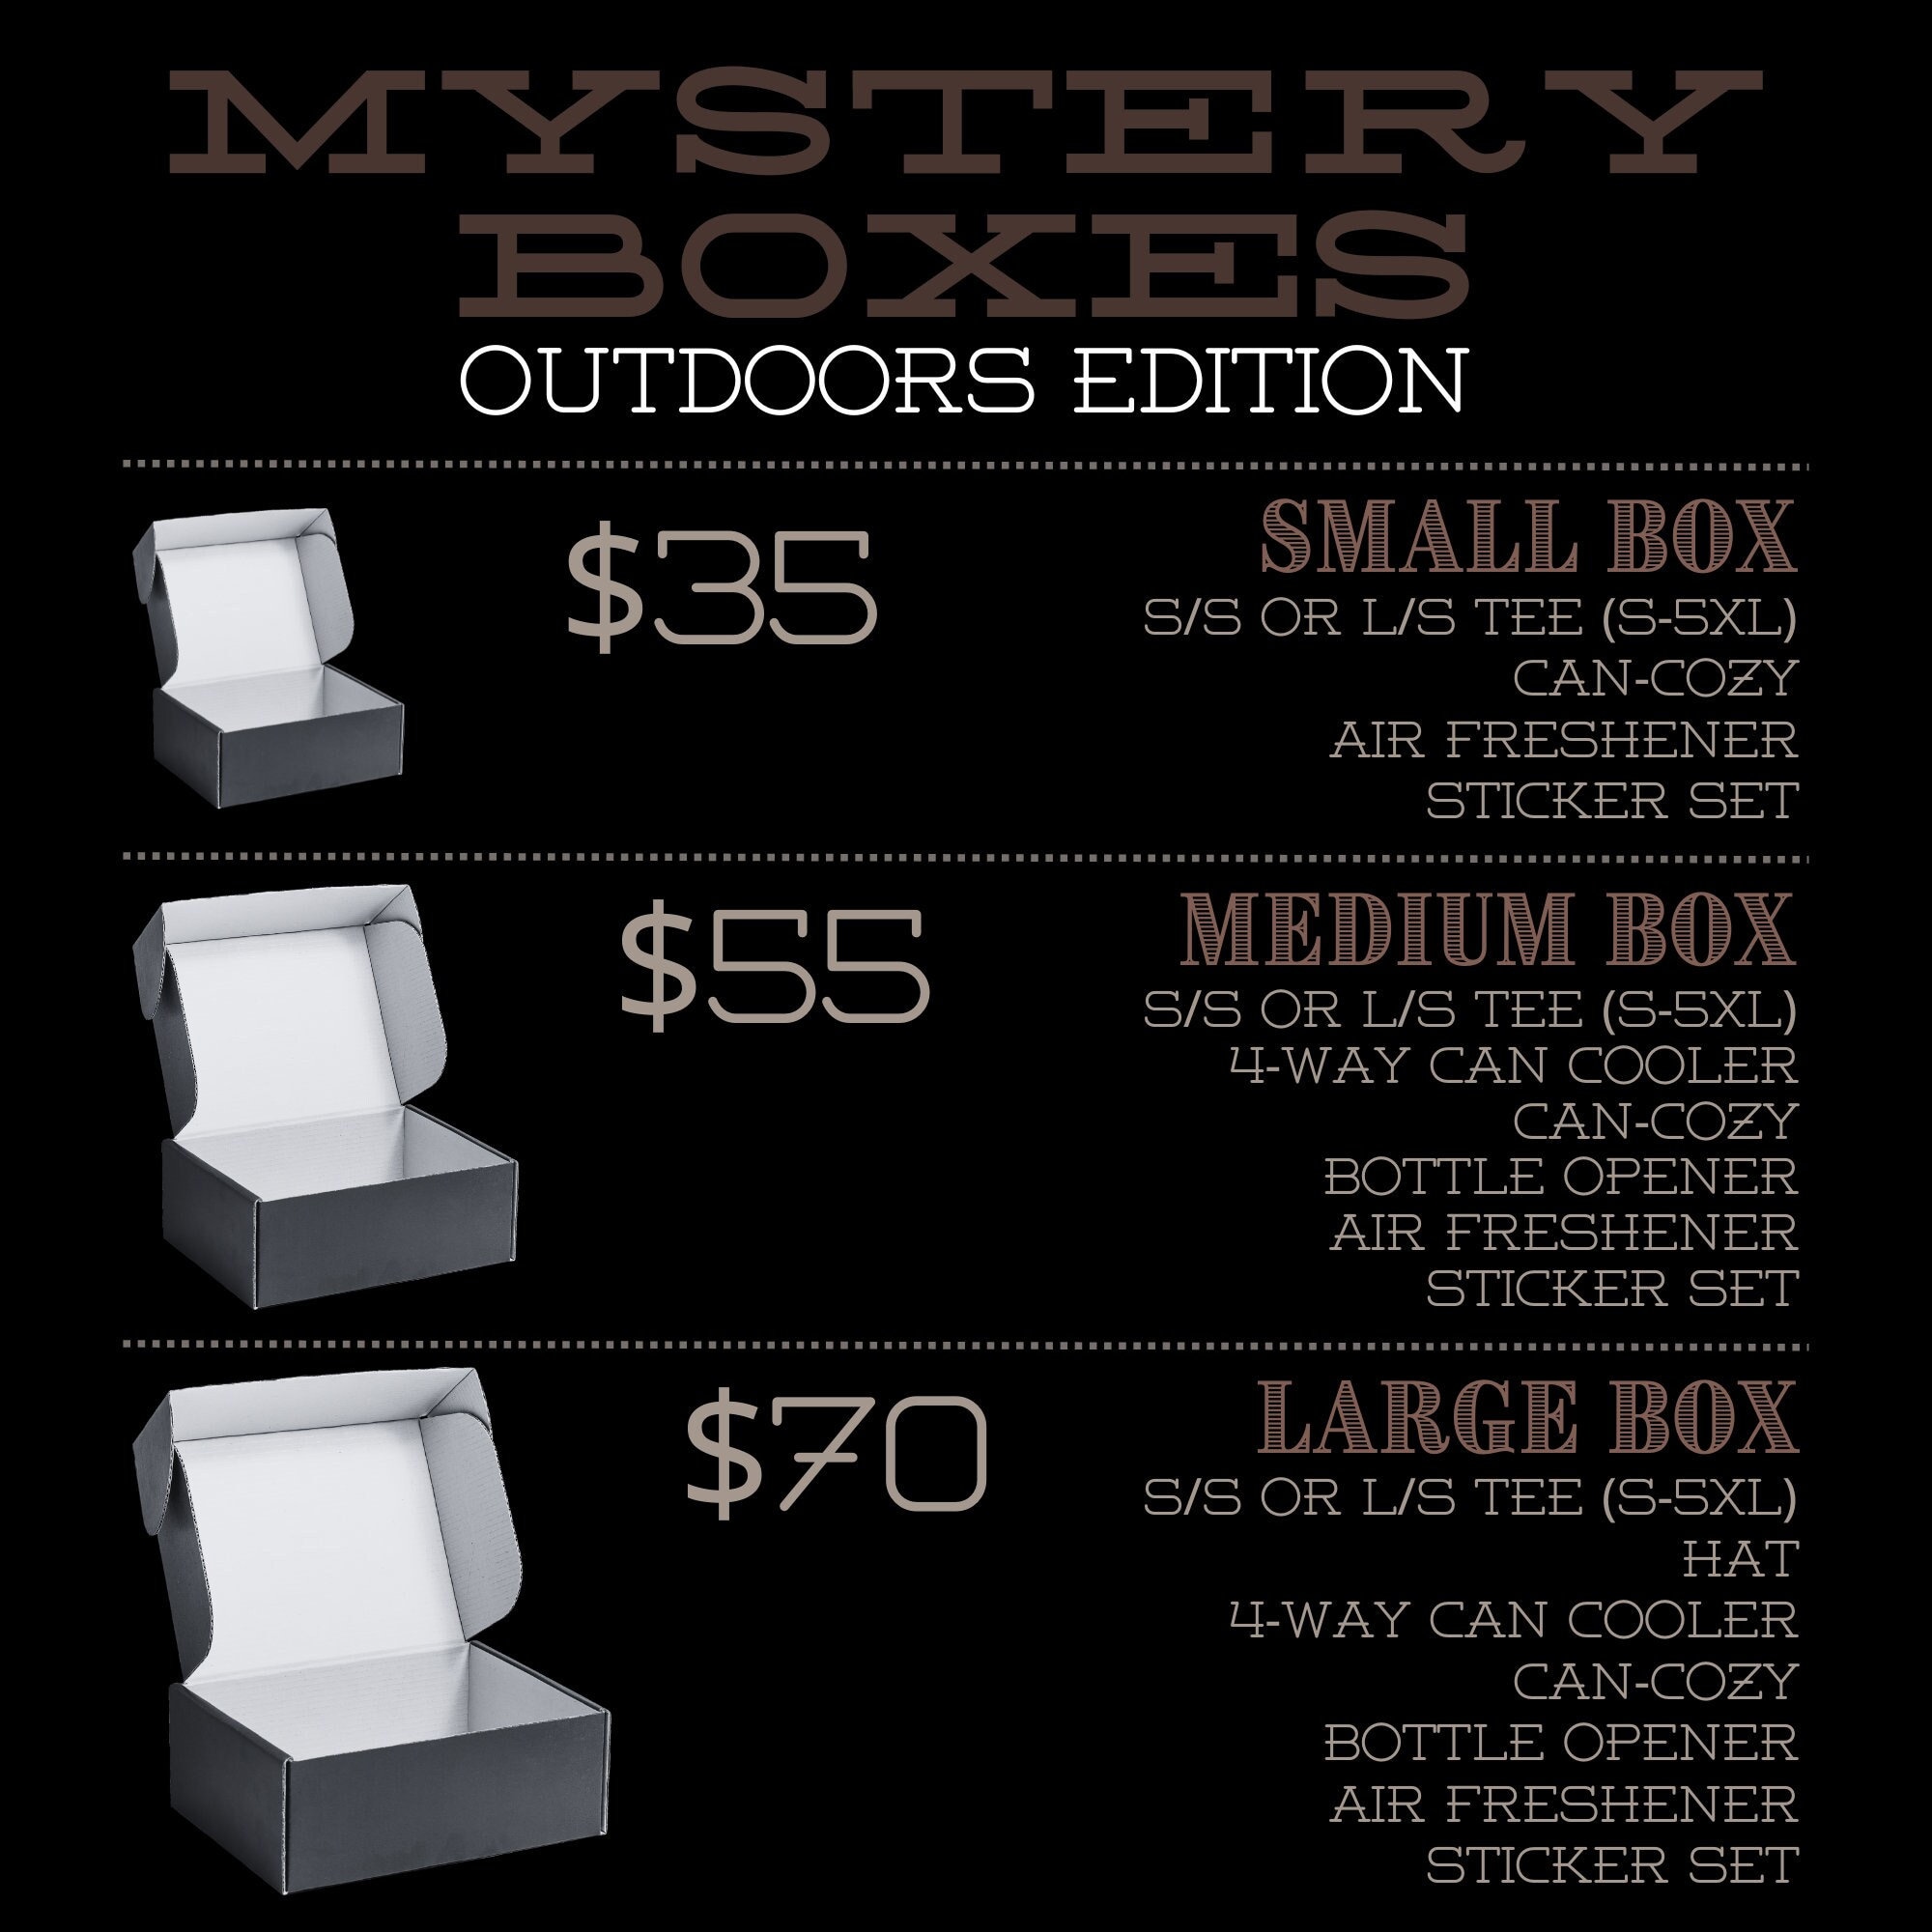 Mystery Scrap Box - 10 lb [MYSTERYBOX] - $49.95 